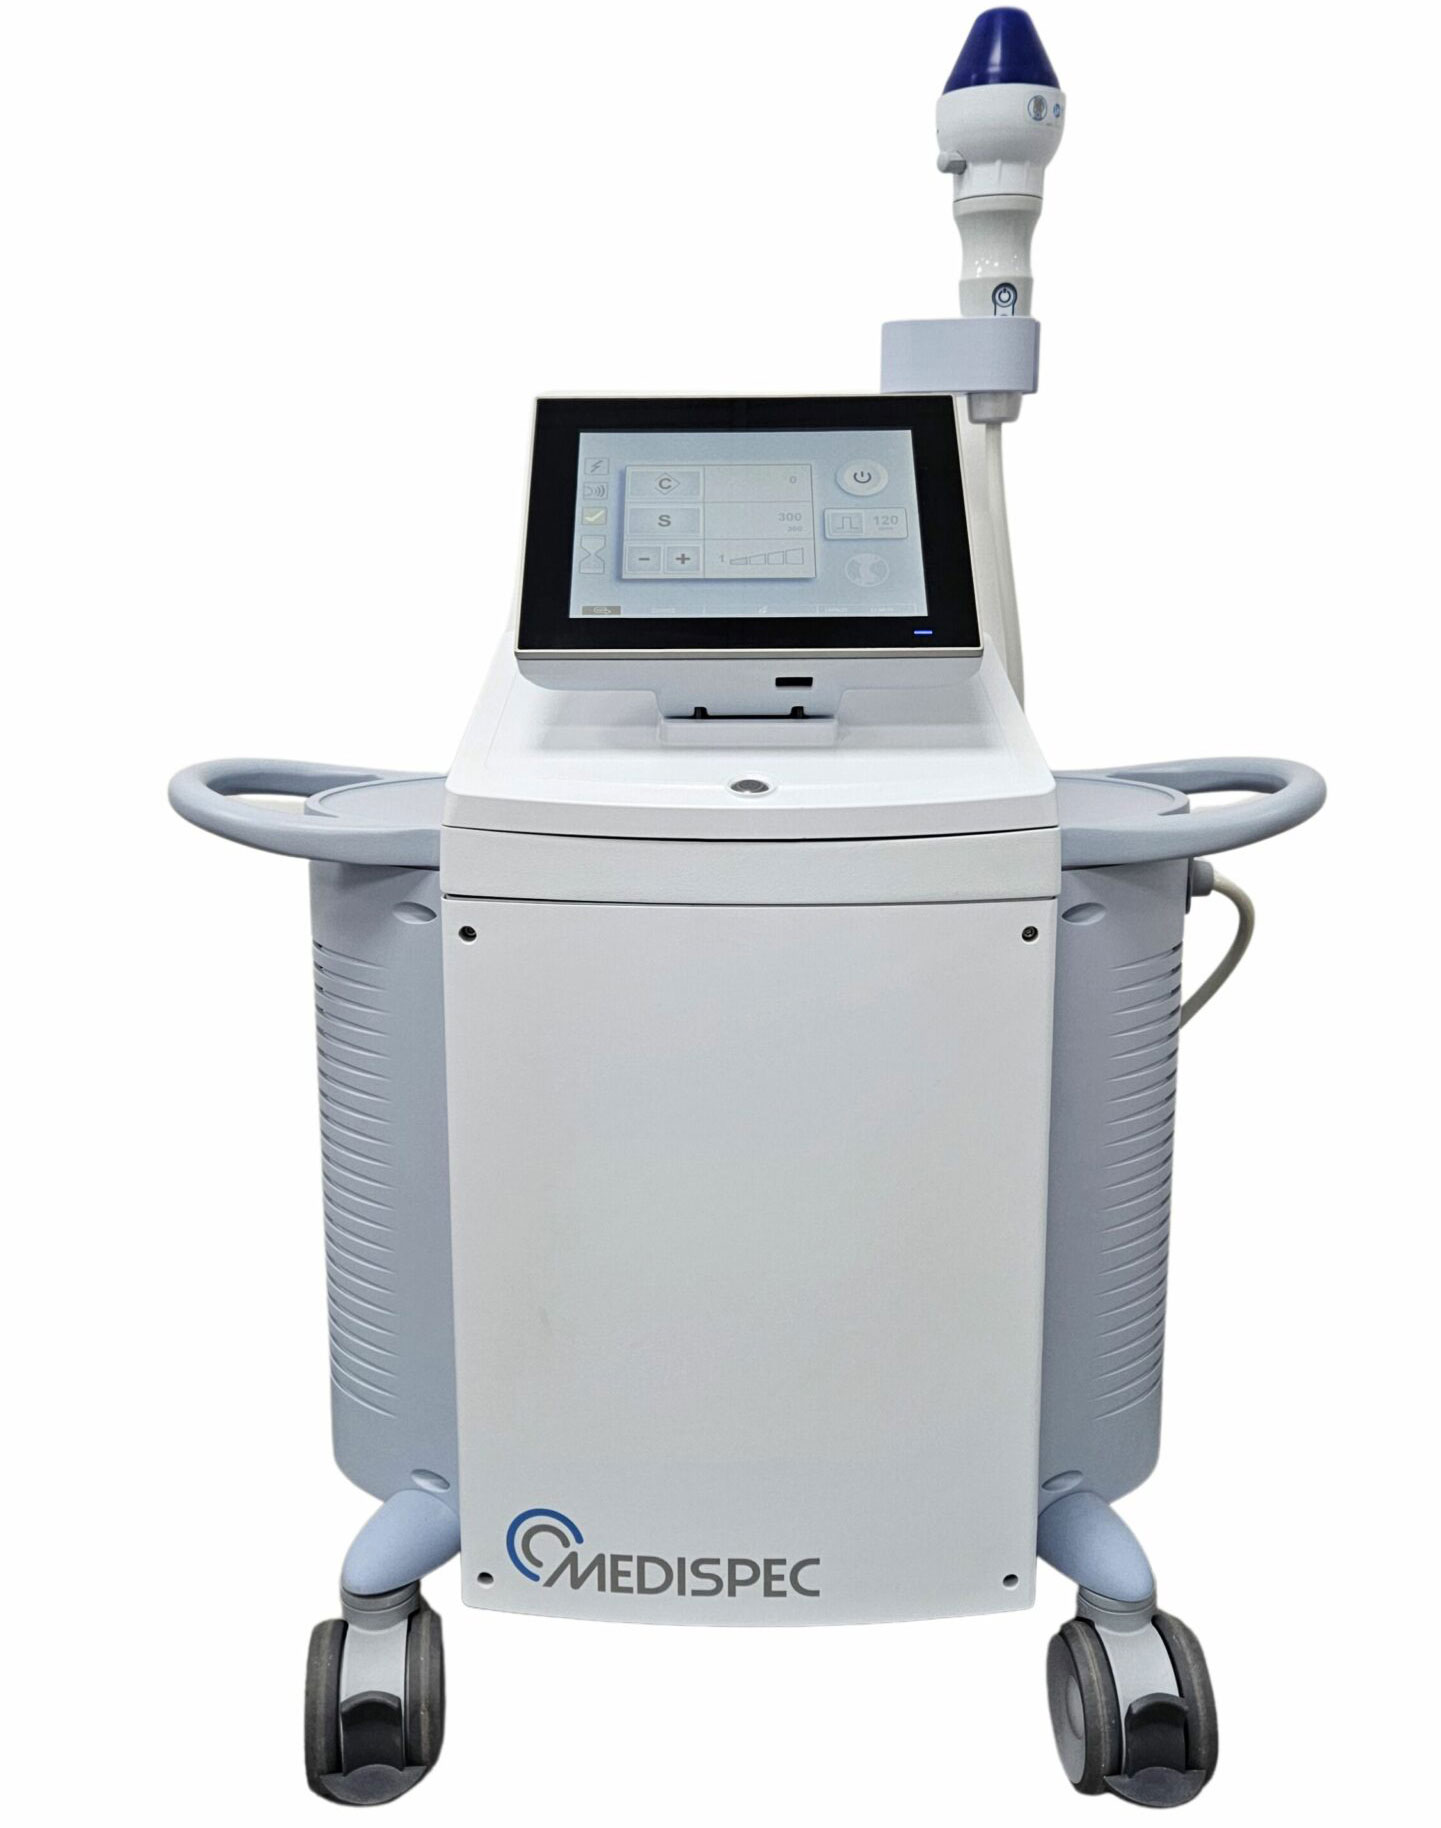 Em Shockwave Device 2in1 Shock Wave Therapy Machine for Erectile  Dysfunction Medical Equipments Shockwave